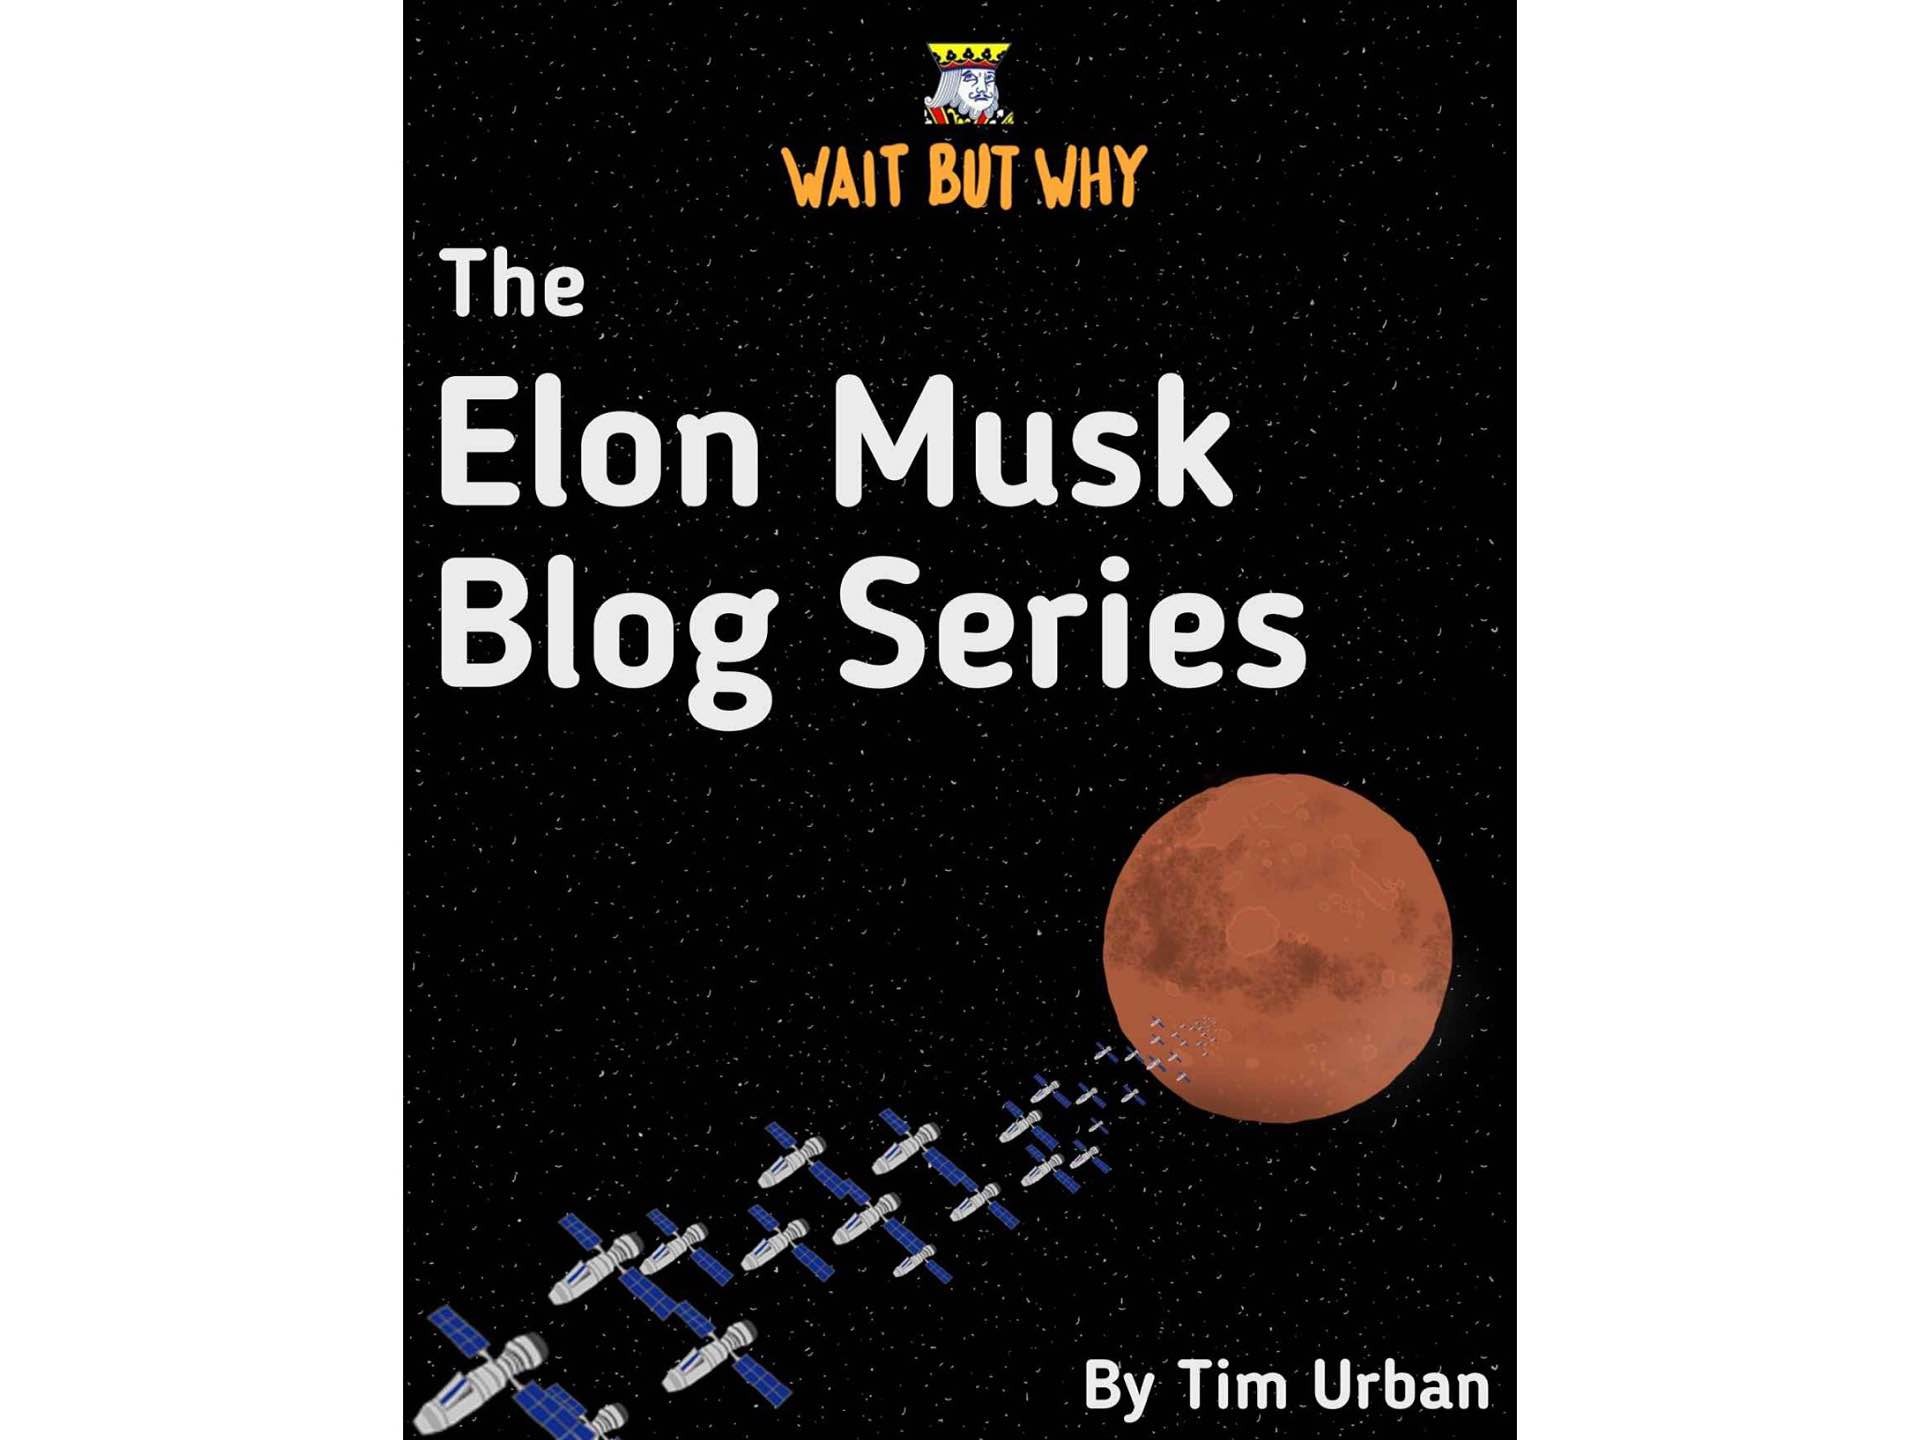 The Elon Musk Blog Series Kindle ebook by Tim Urban.